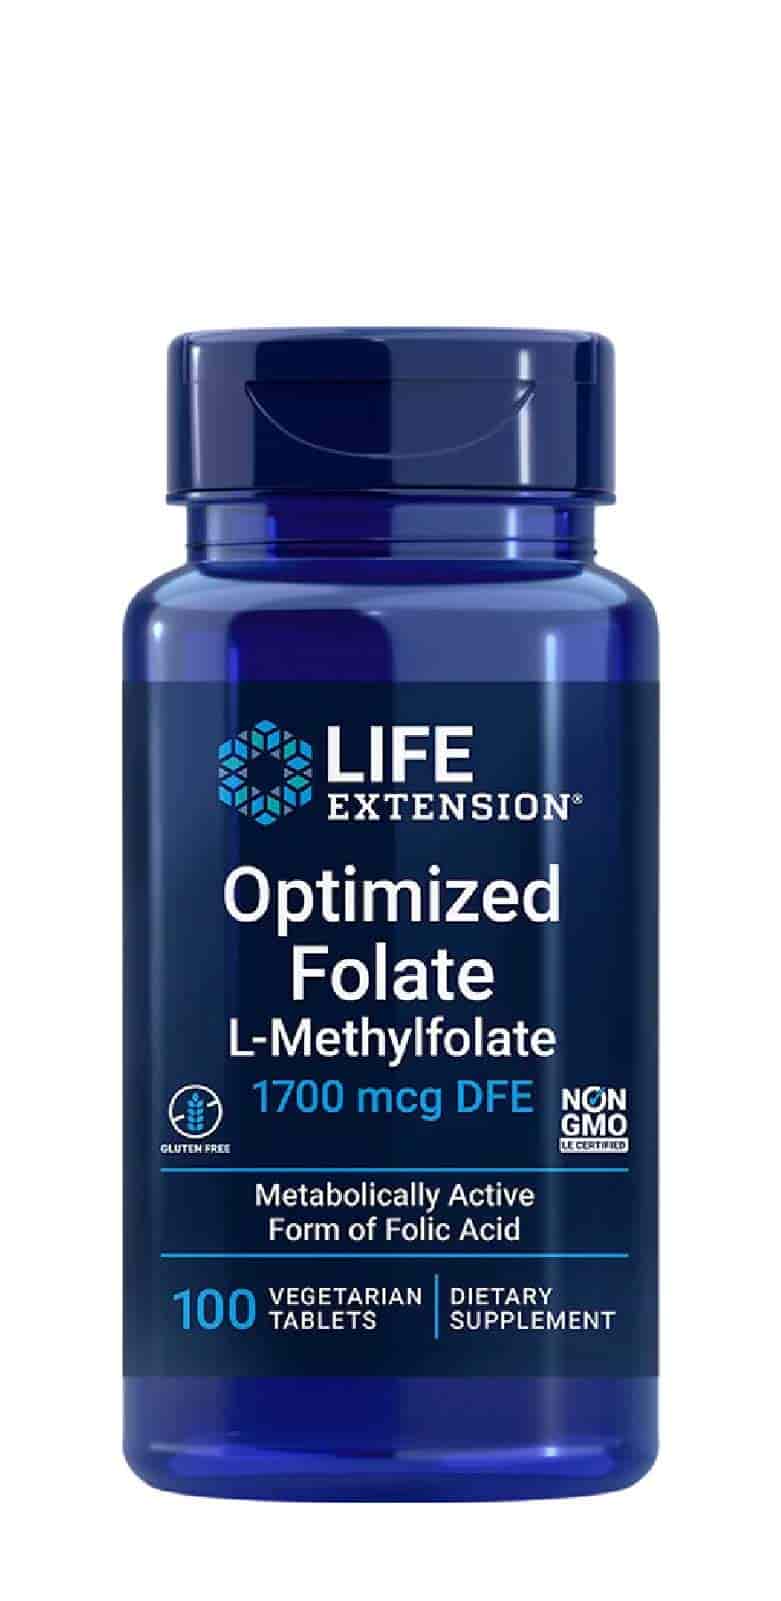 Buy Life Extension Optimized Folate (L-Methylfolate) at LiveHelfi